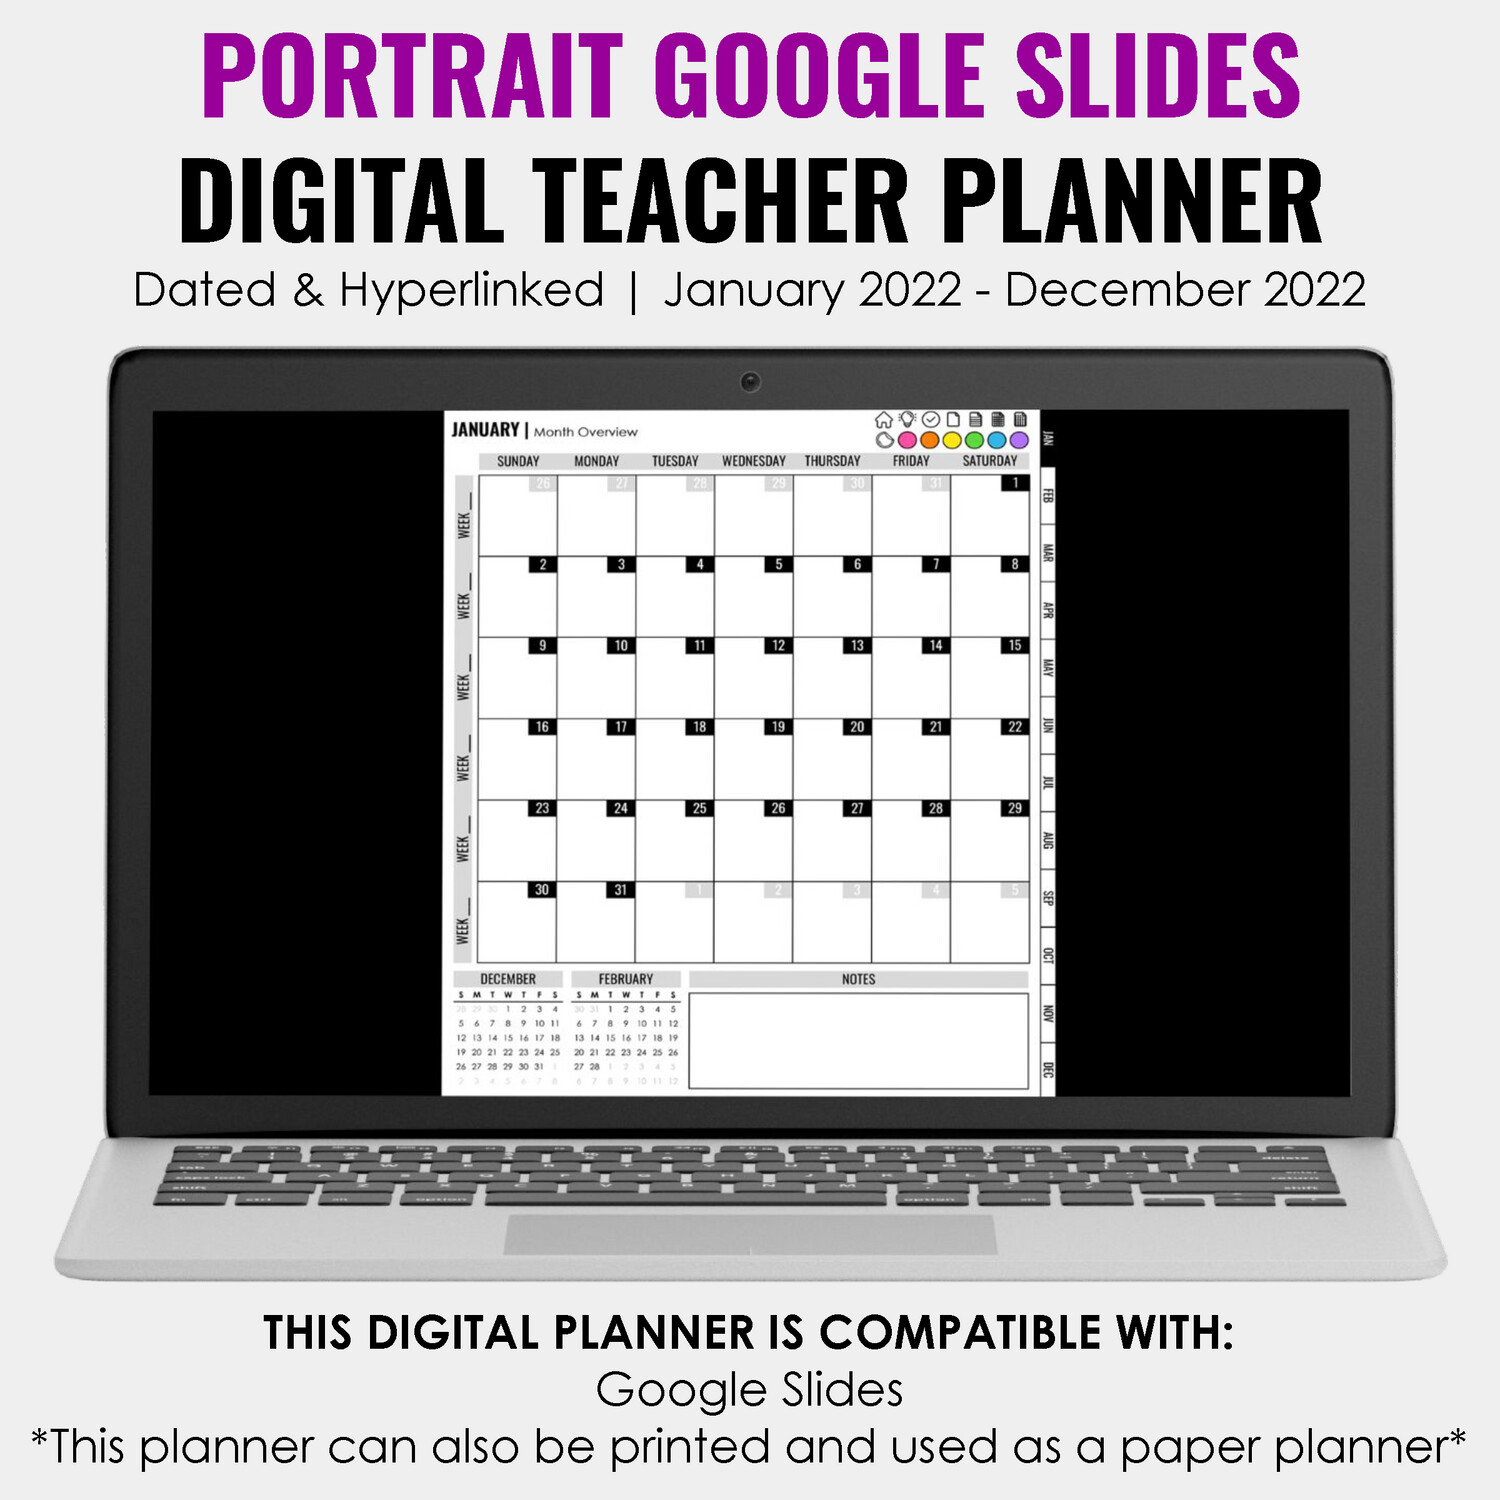 2022 Google Slides Digital Teacher Planner | Portrait